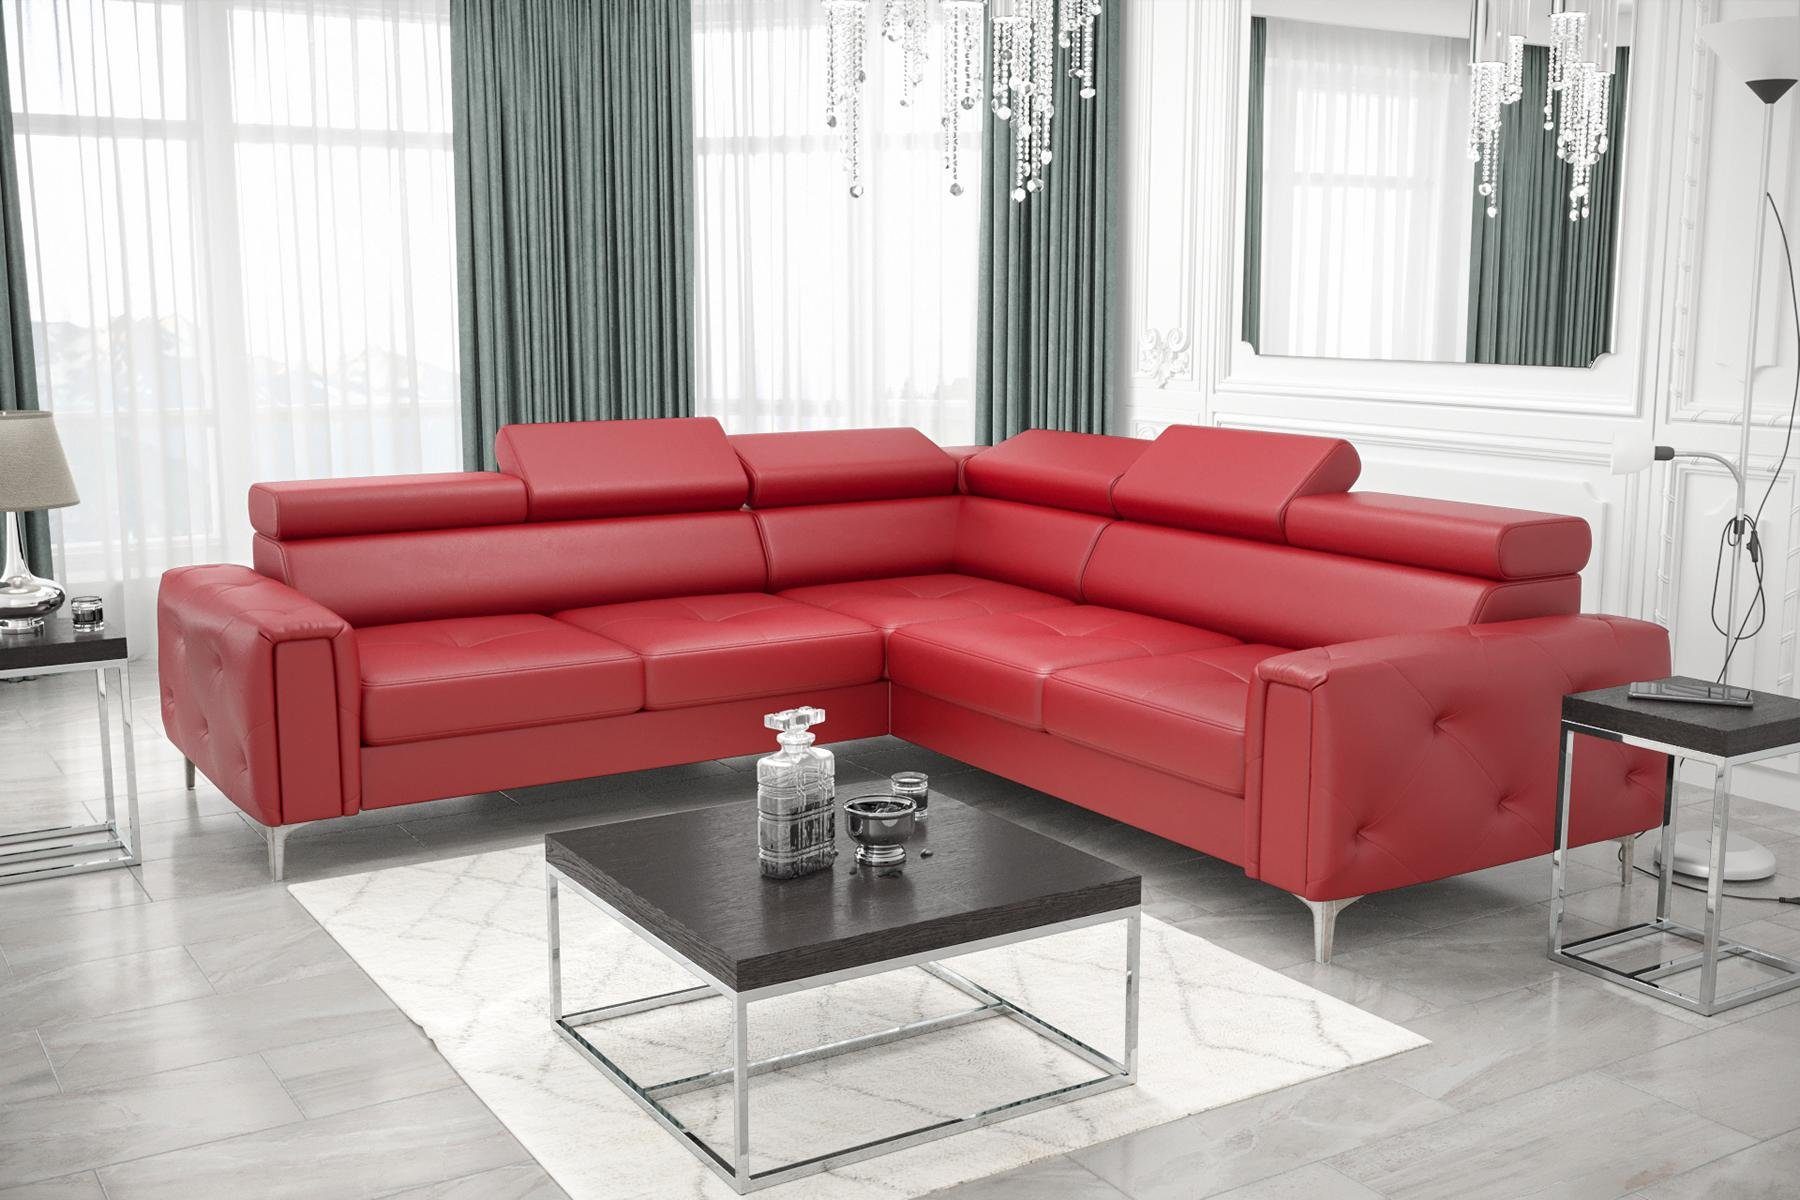 JVmoebel Ecksofa Graues Luxus Ecksofa Moderne Wohnlandschaft Polster Sofa Neu, Made in Europe Rot